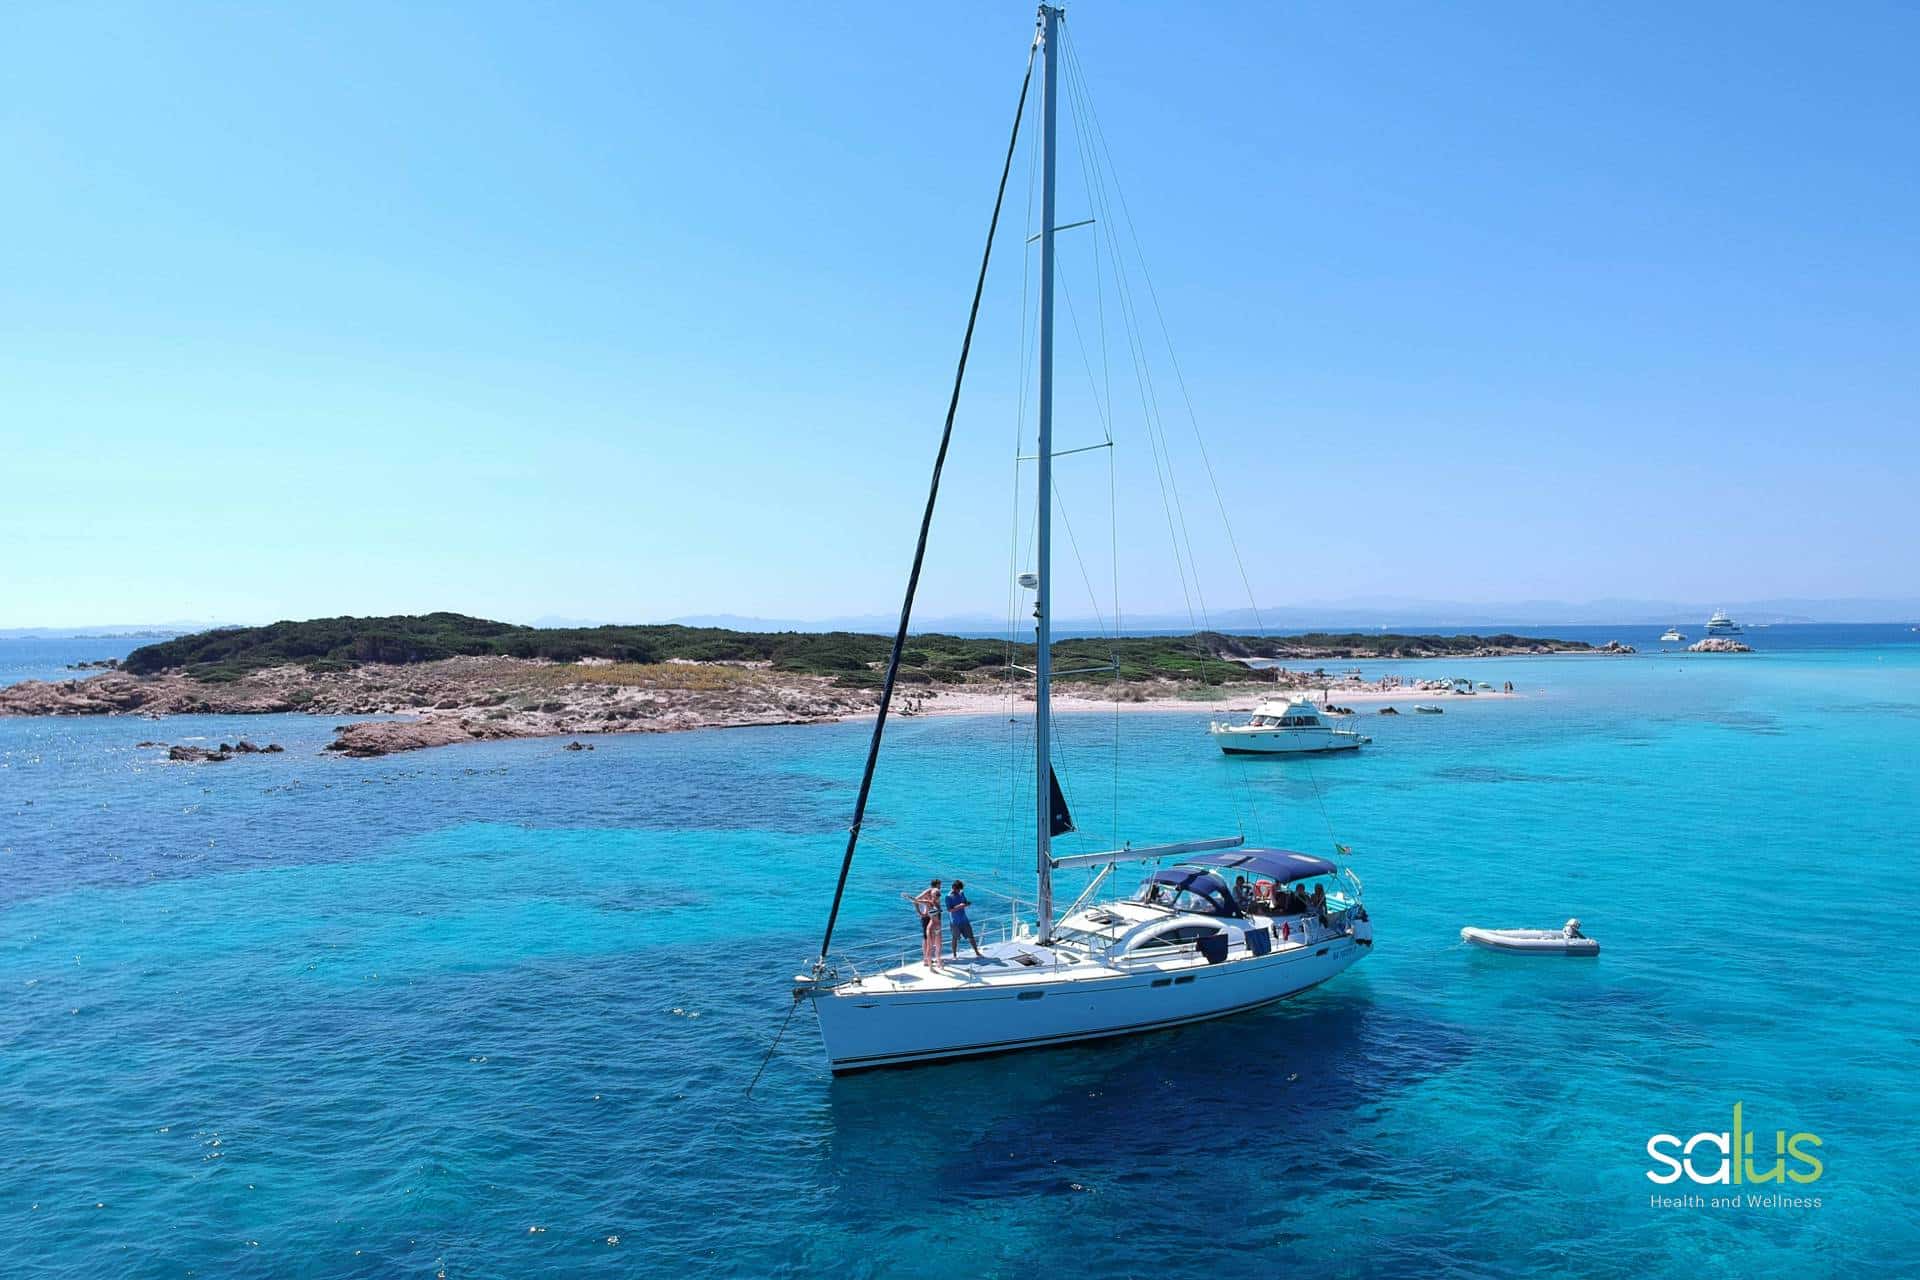 Vacanze in barca a vela - Salus blog